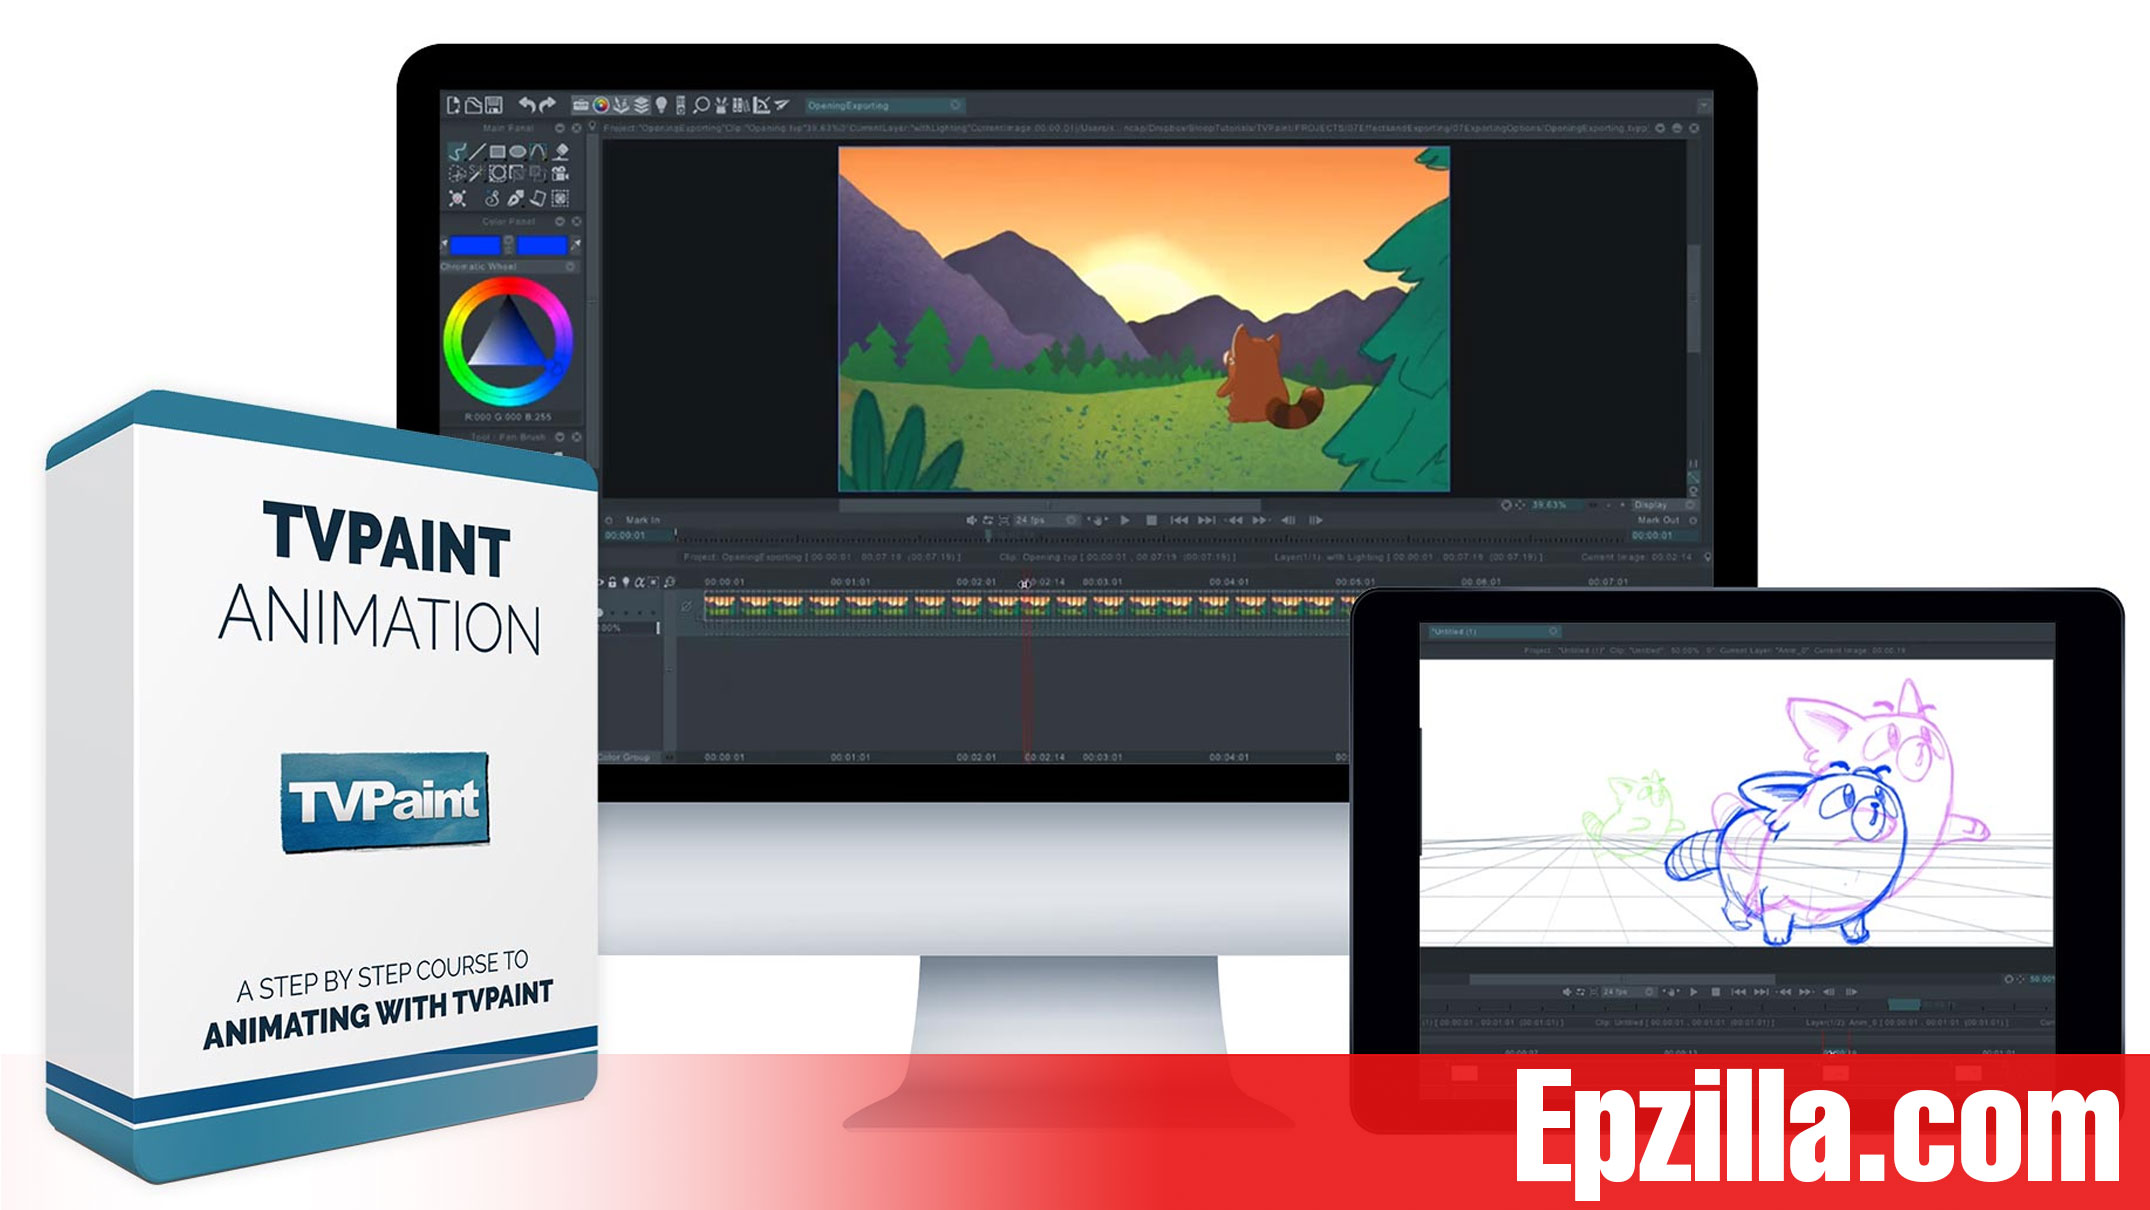 Bloop Animations TVPaint Animation Free Download Epzilla.com